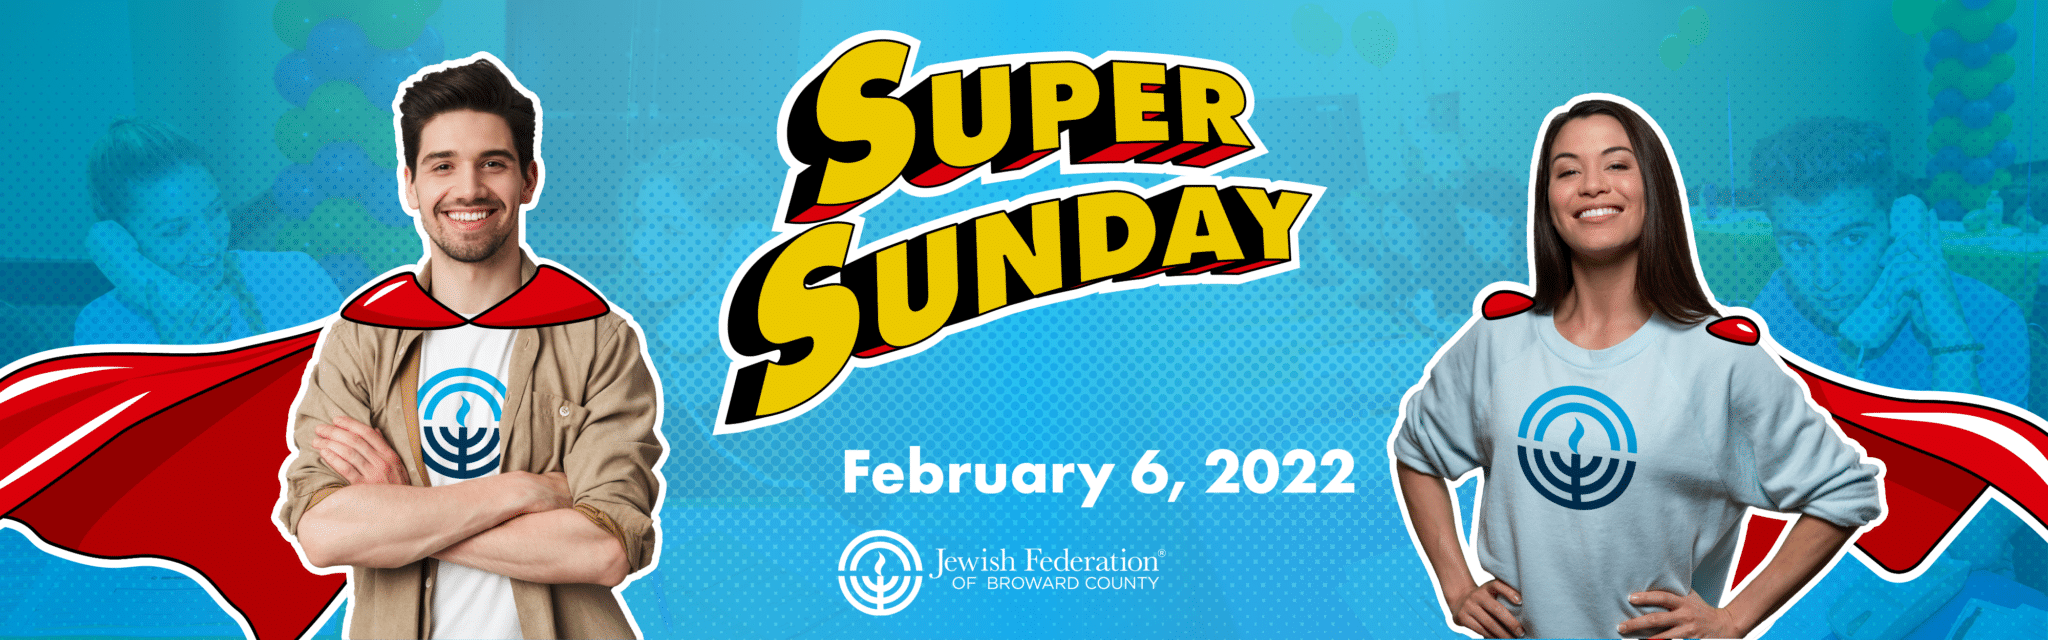 Super Sunday 2022 | Jewish Federation of Broward County